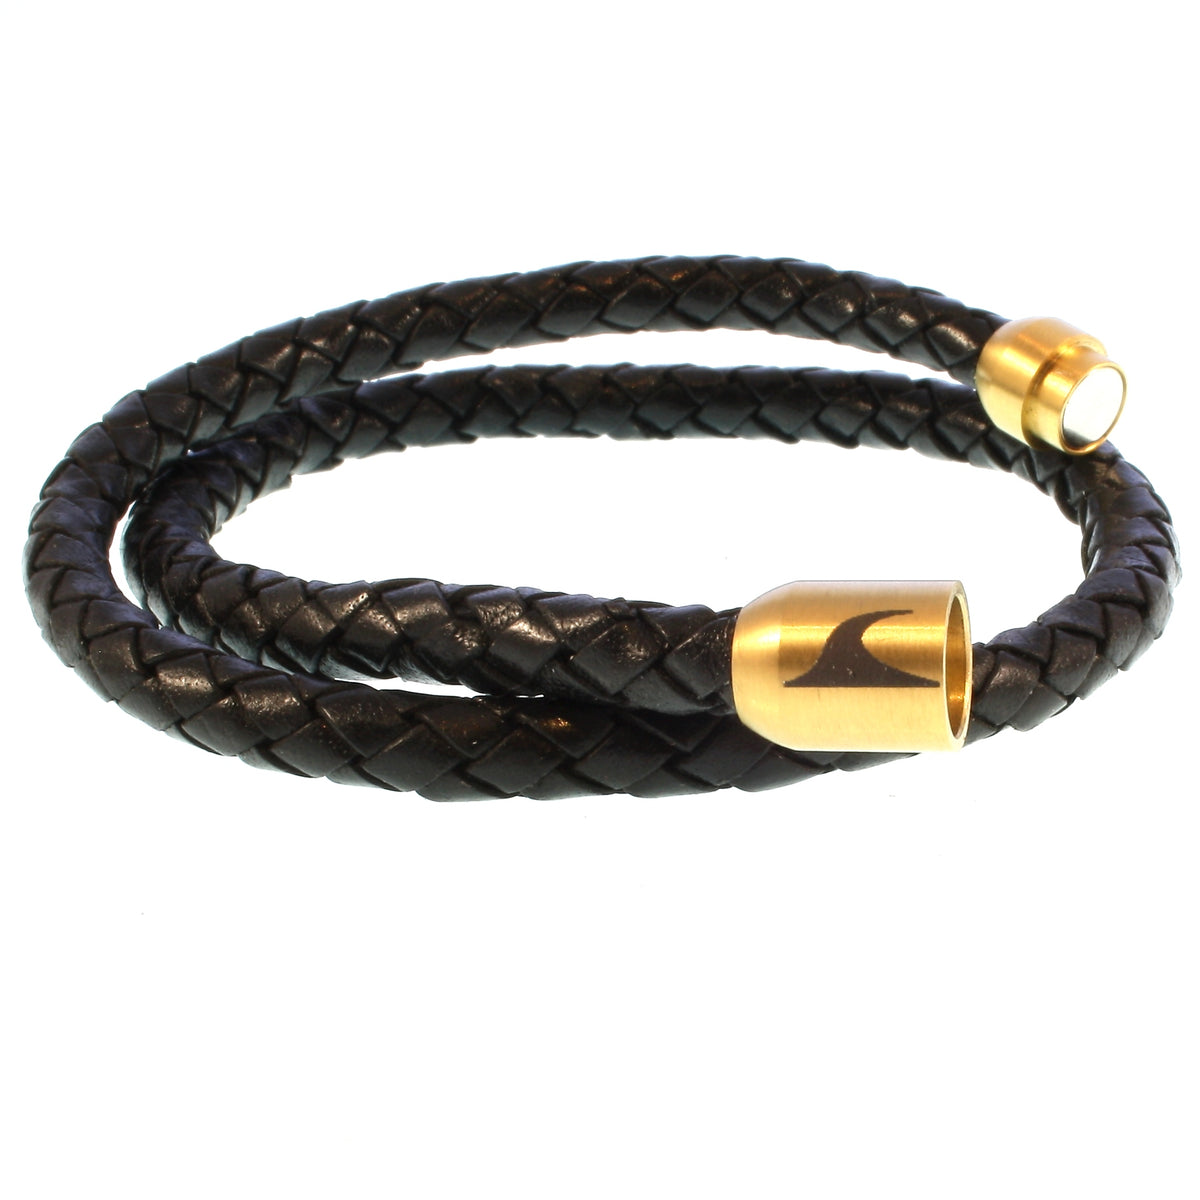 Herren-Leder-Armband-hawaii-schwarz-gold-geflochten-Edelstahlverschluss-offen-wavepirate-shop-f